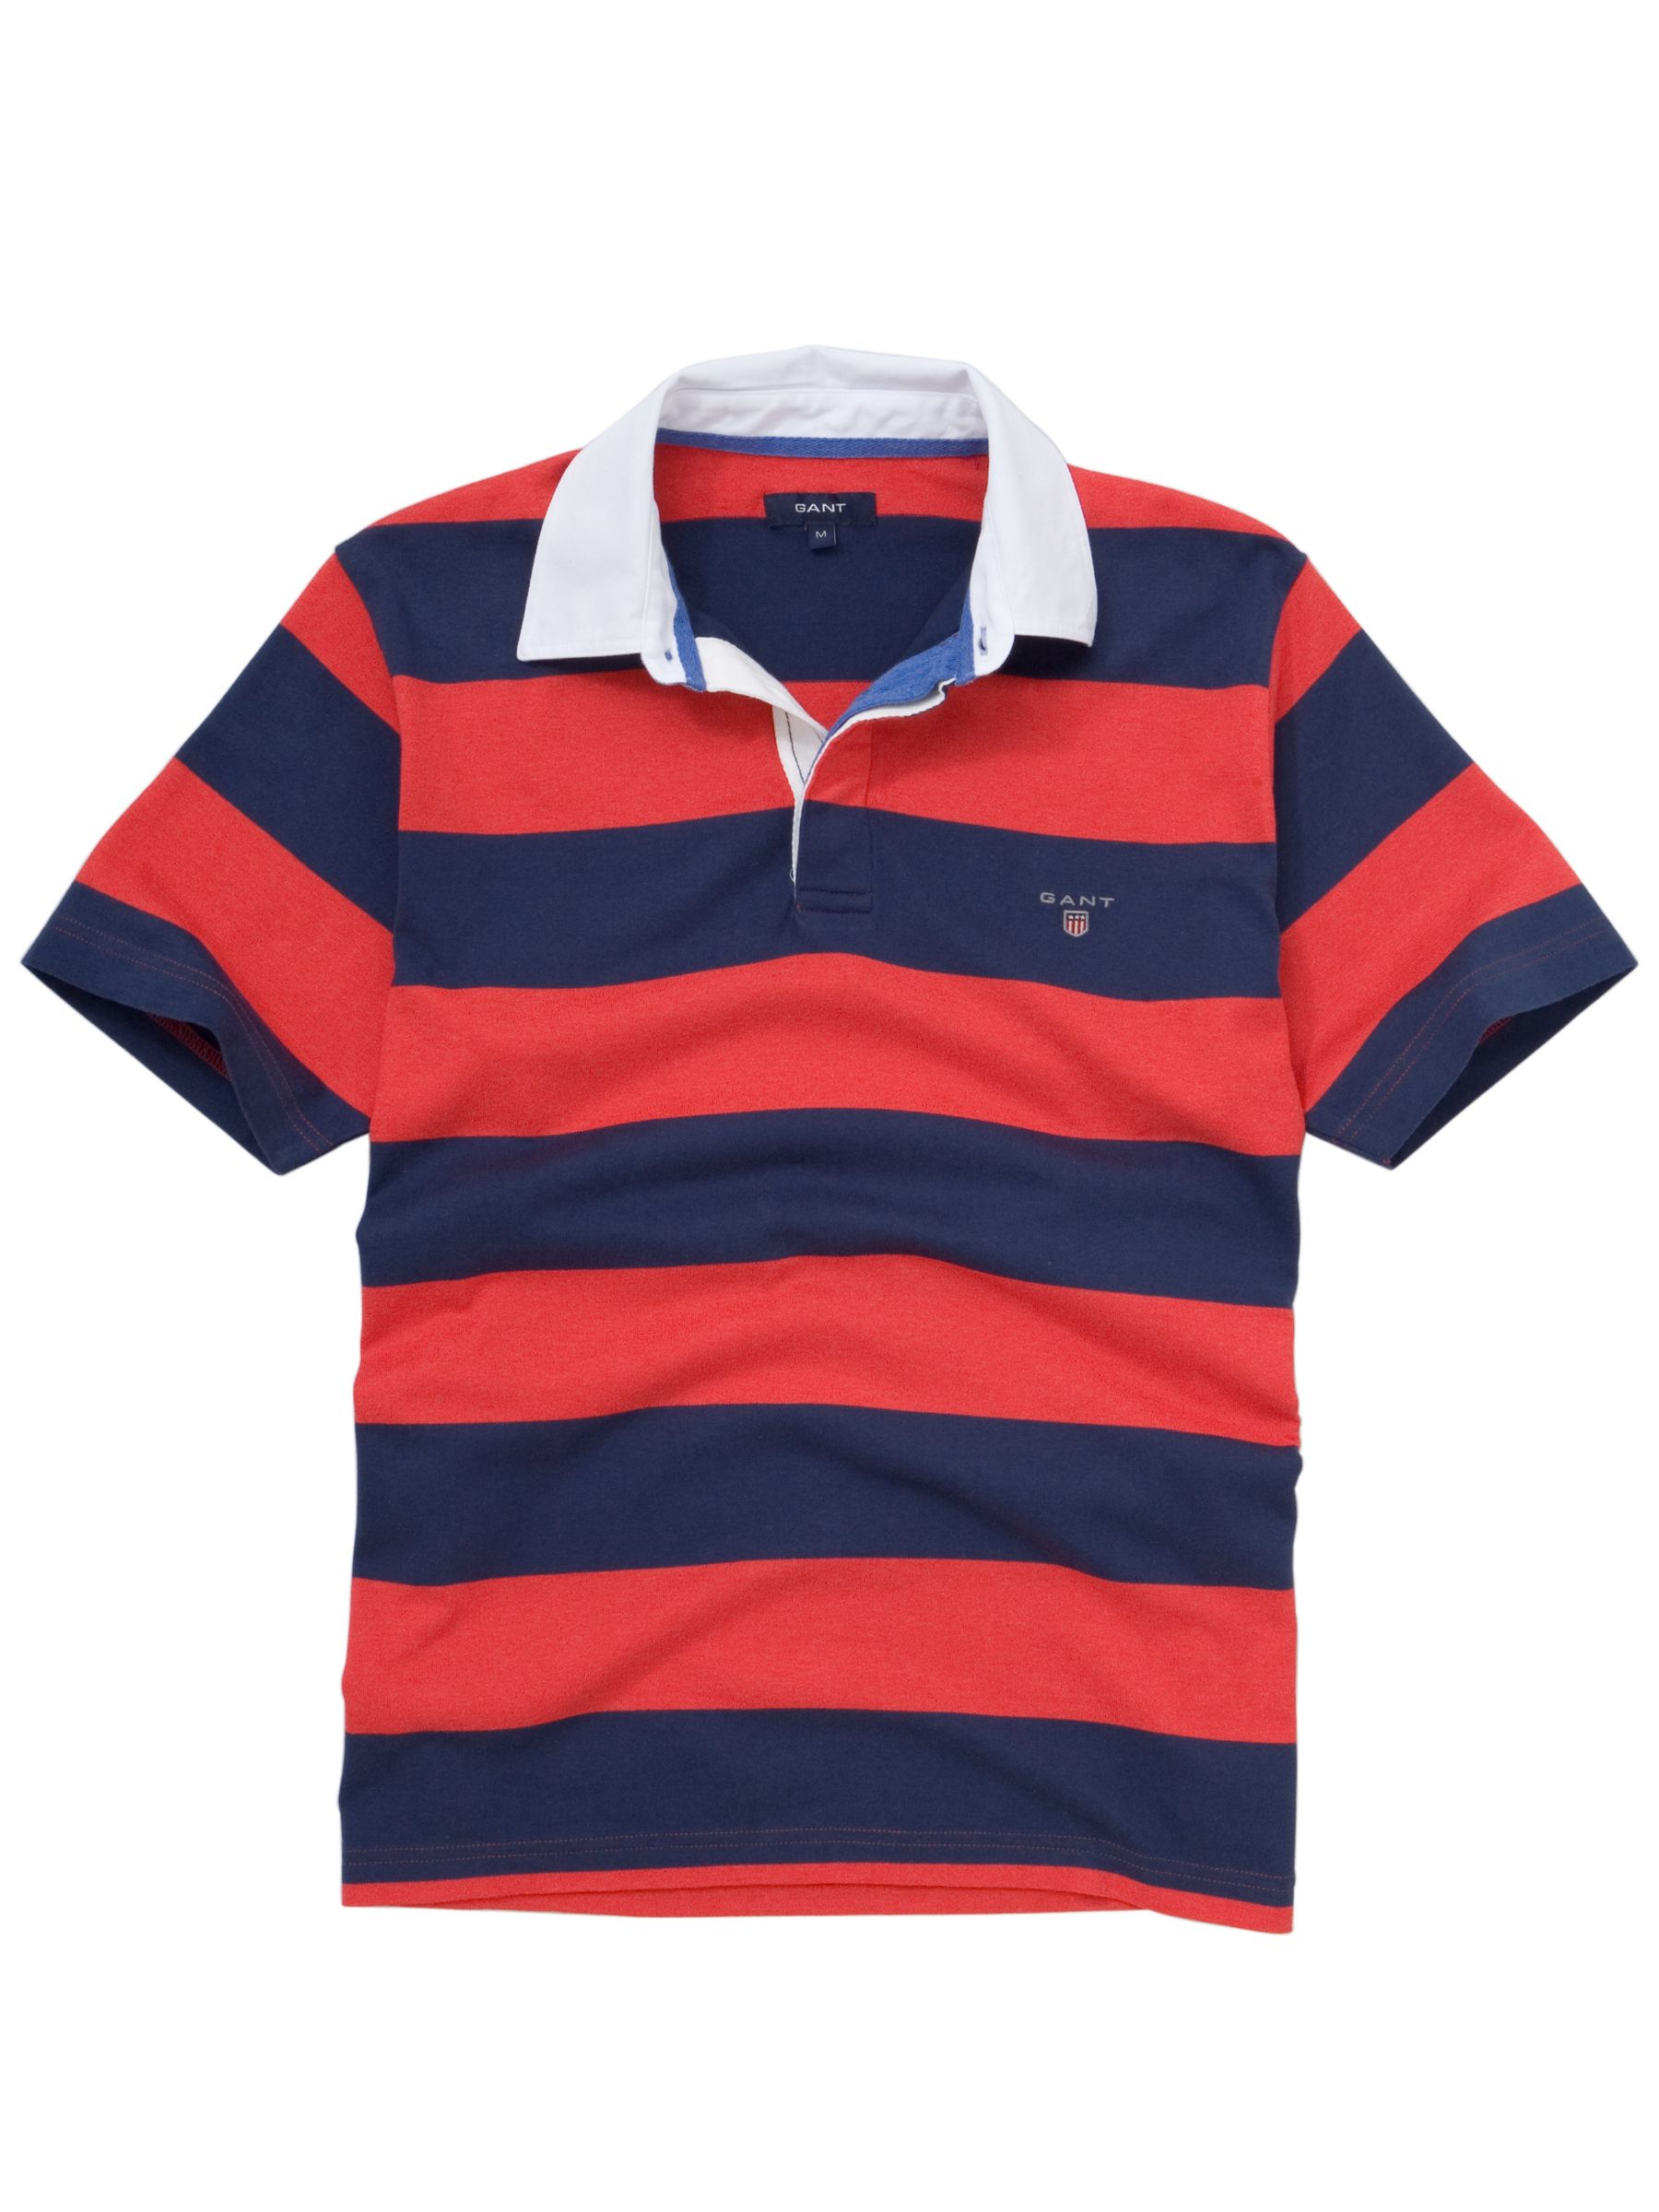 Gant Bar Stripe Heavy Rugby Shirt, Red Melange